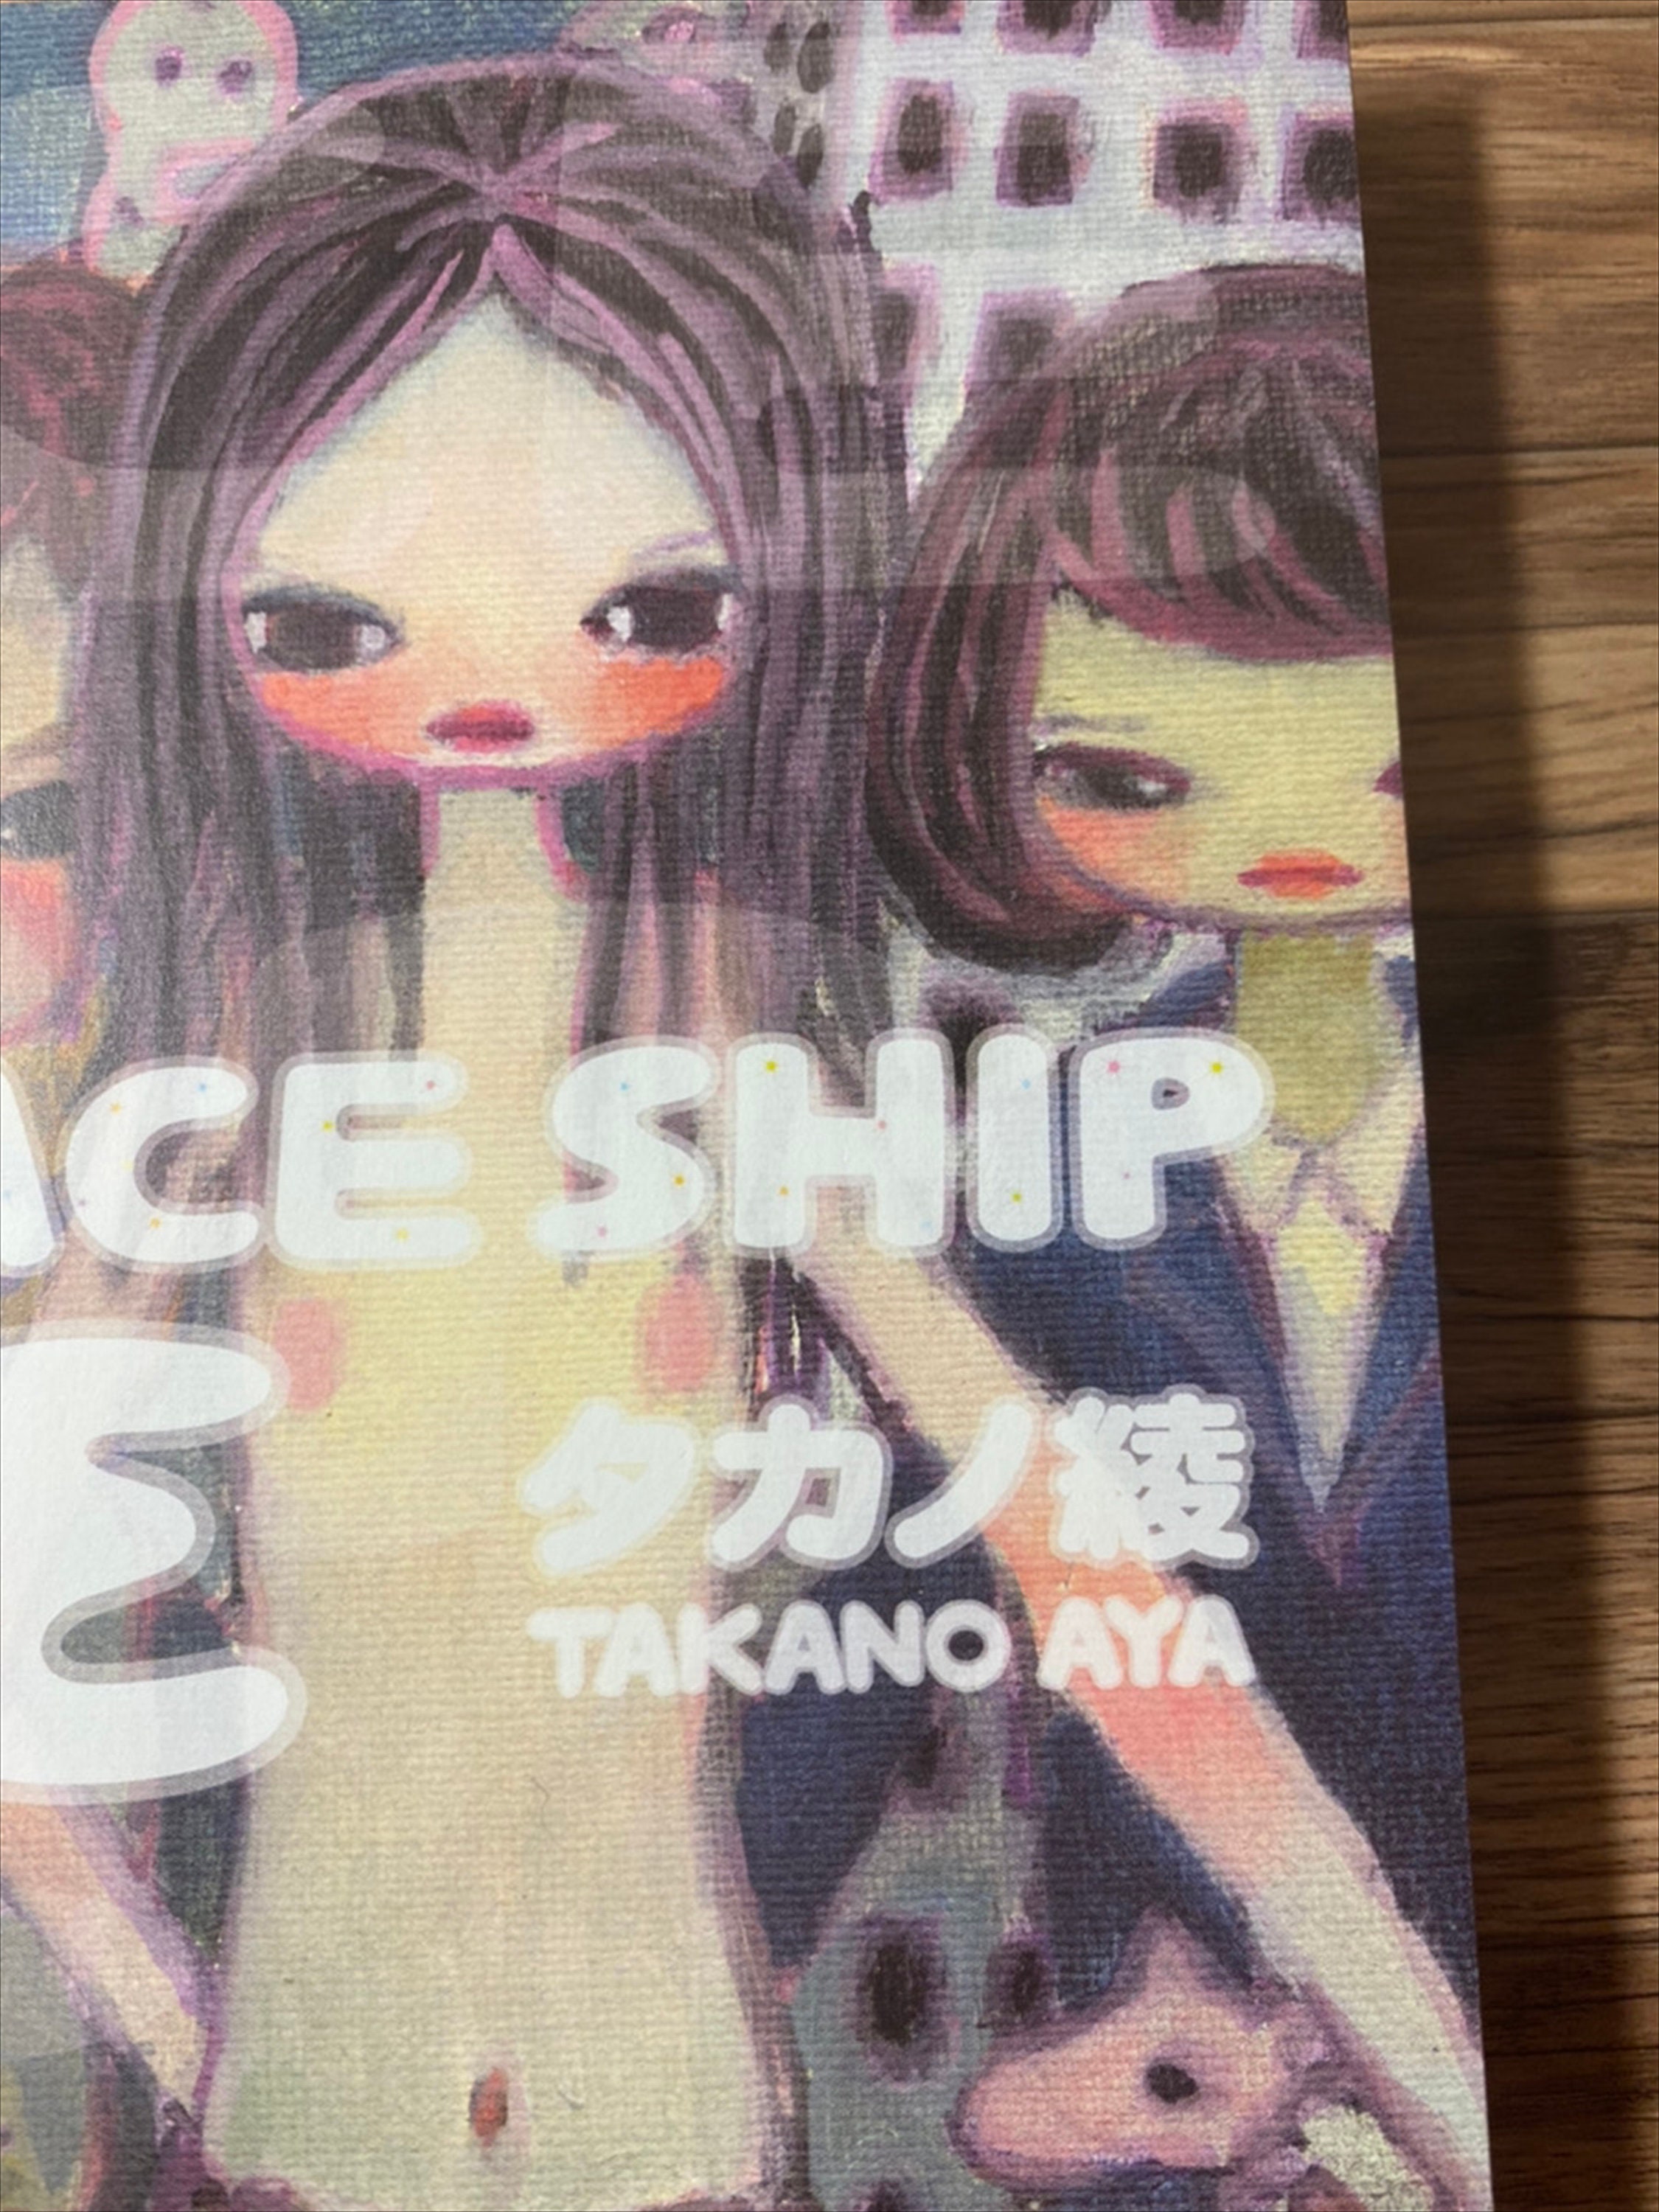 Aya Takano Sapce Ship EE Japanese Anime Manga ART Book Express 